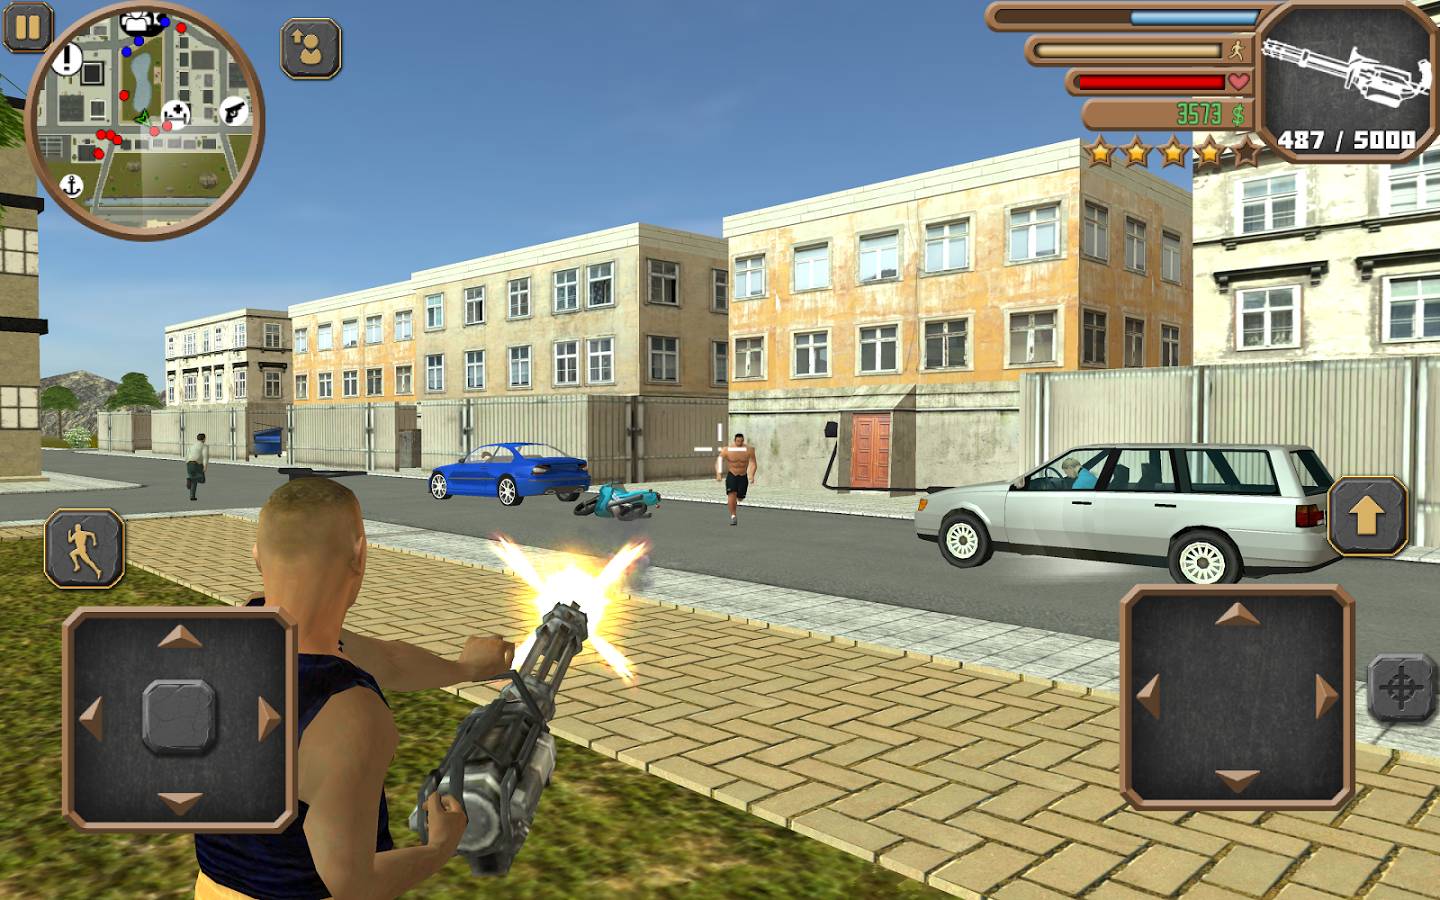 Download City theft simulator